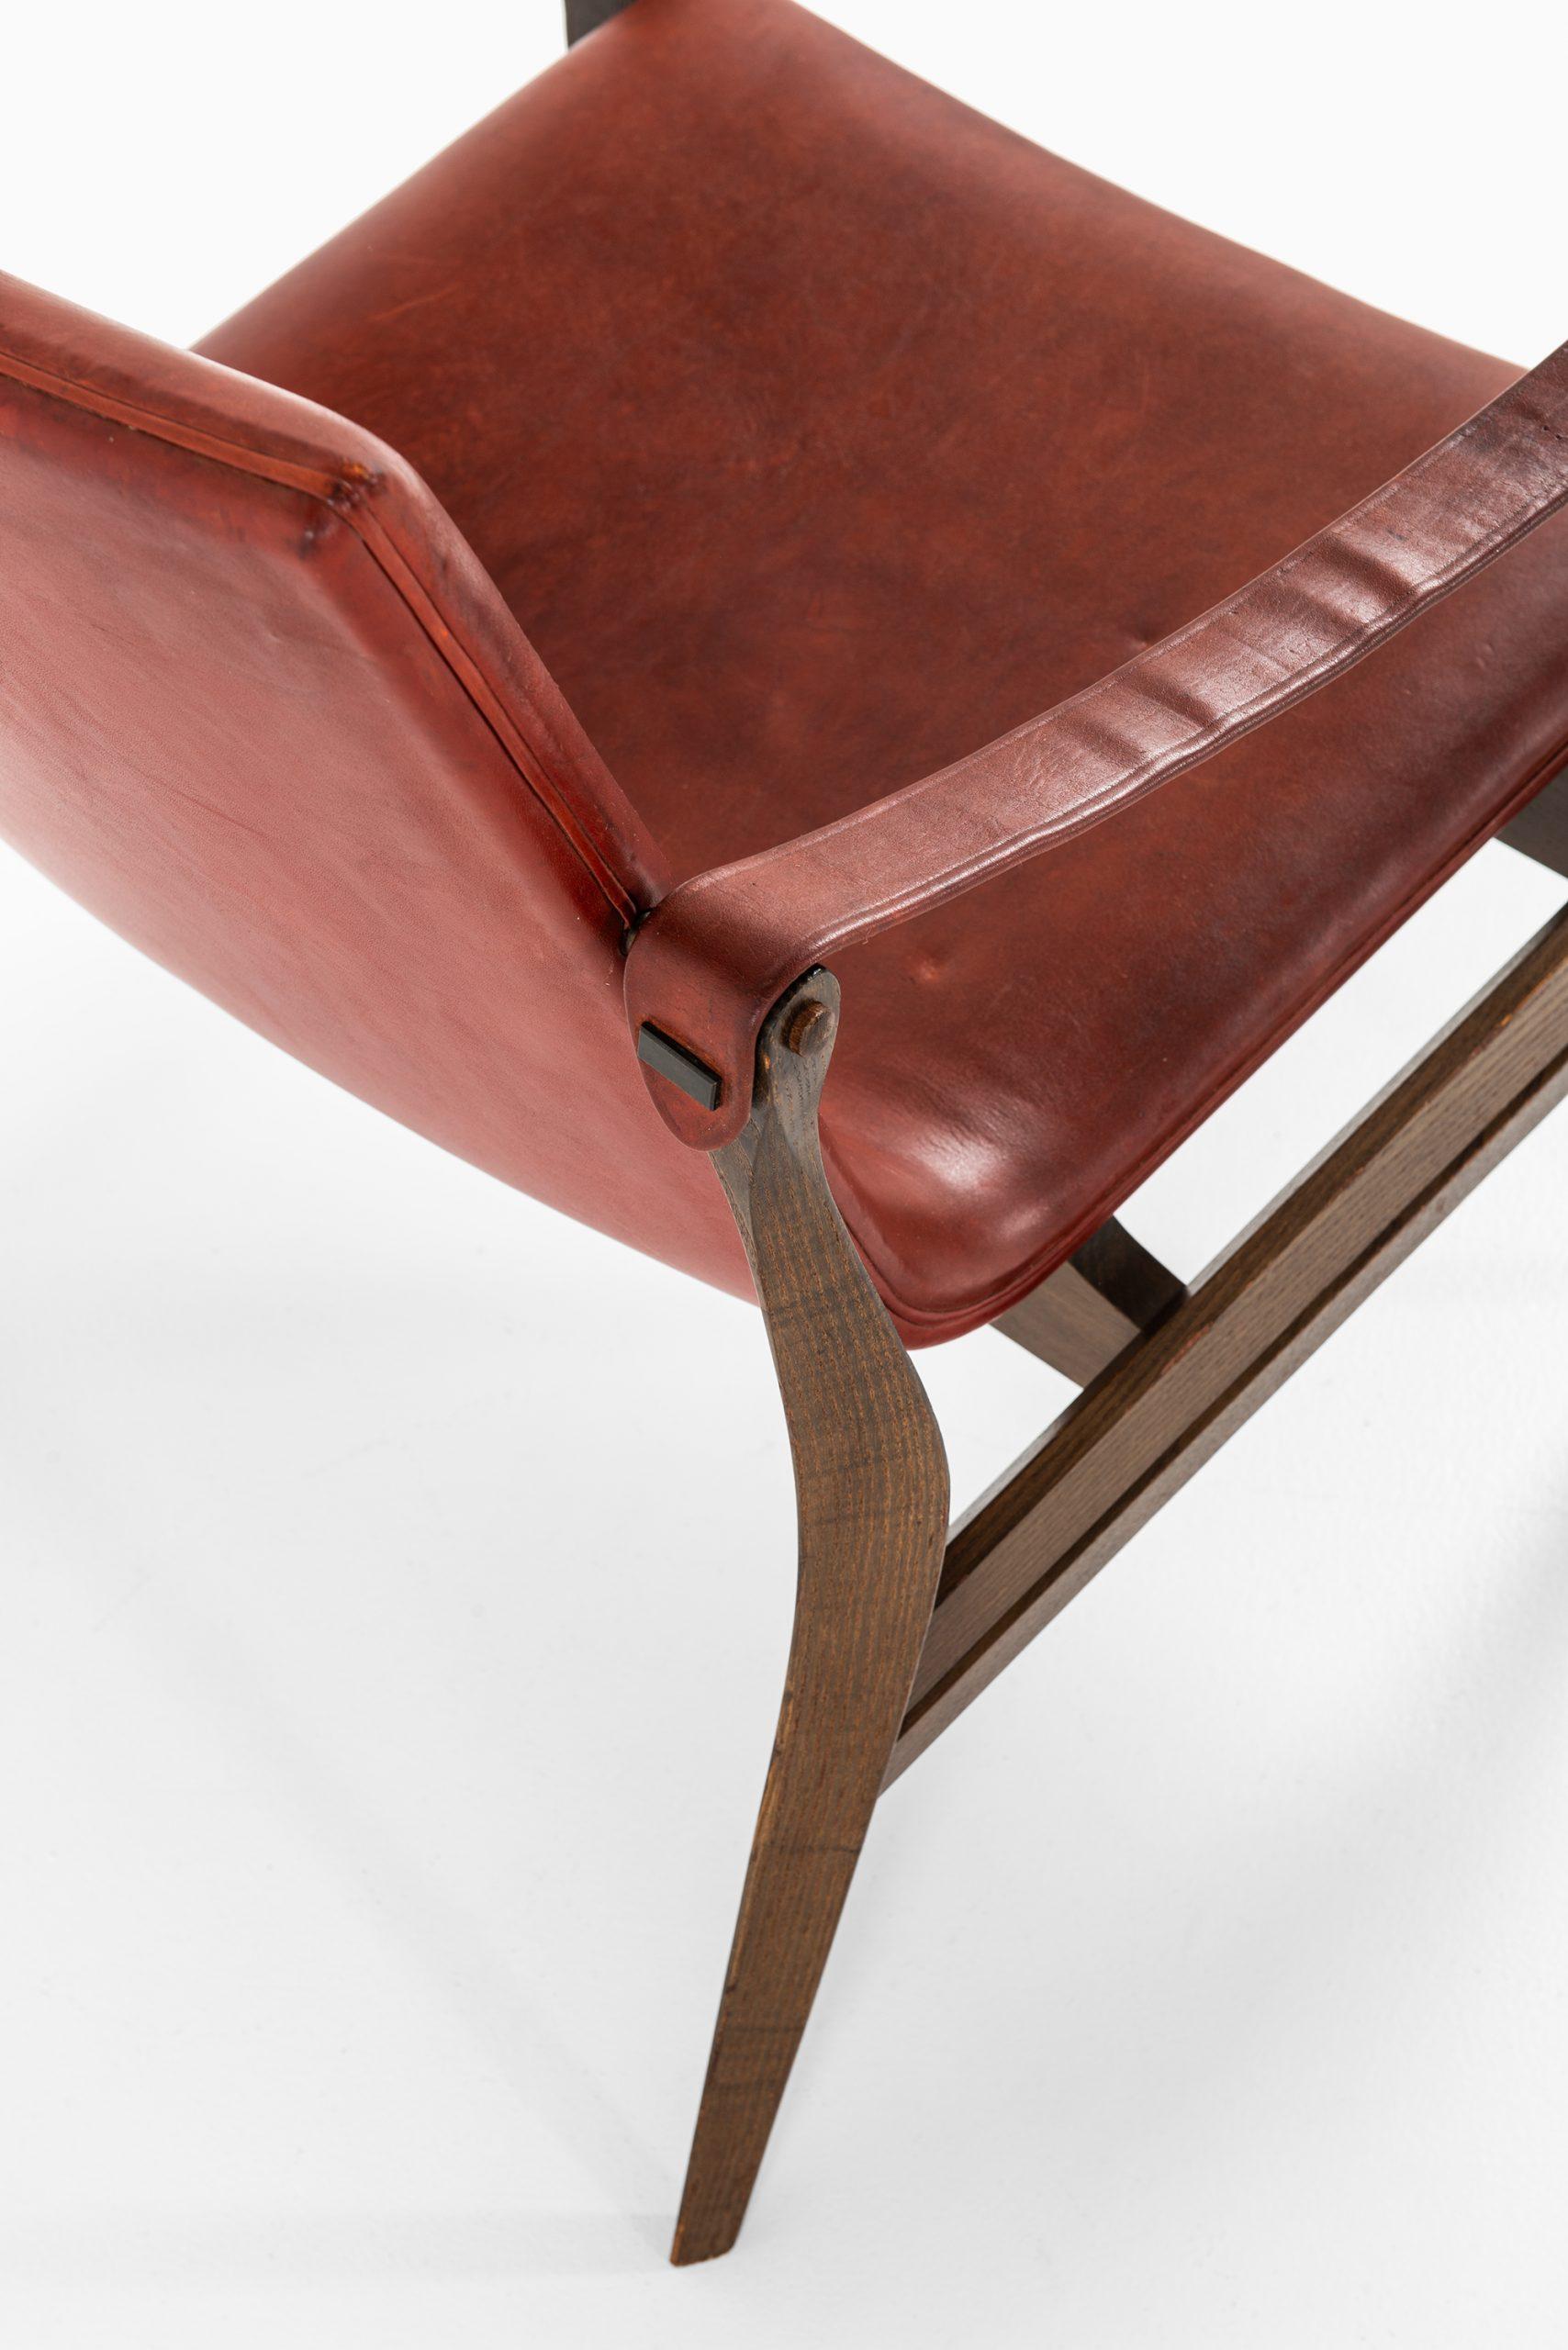 Very rare easy chair designed by Karen & Ebbe Clemmensen. Produced by Fritz Hansen in Denmark.